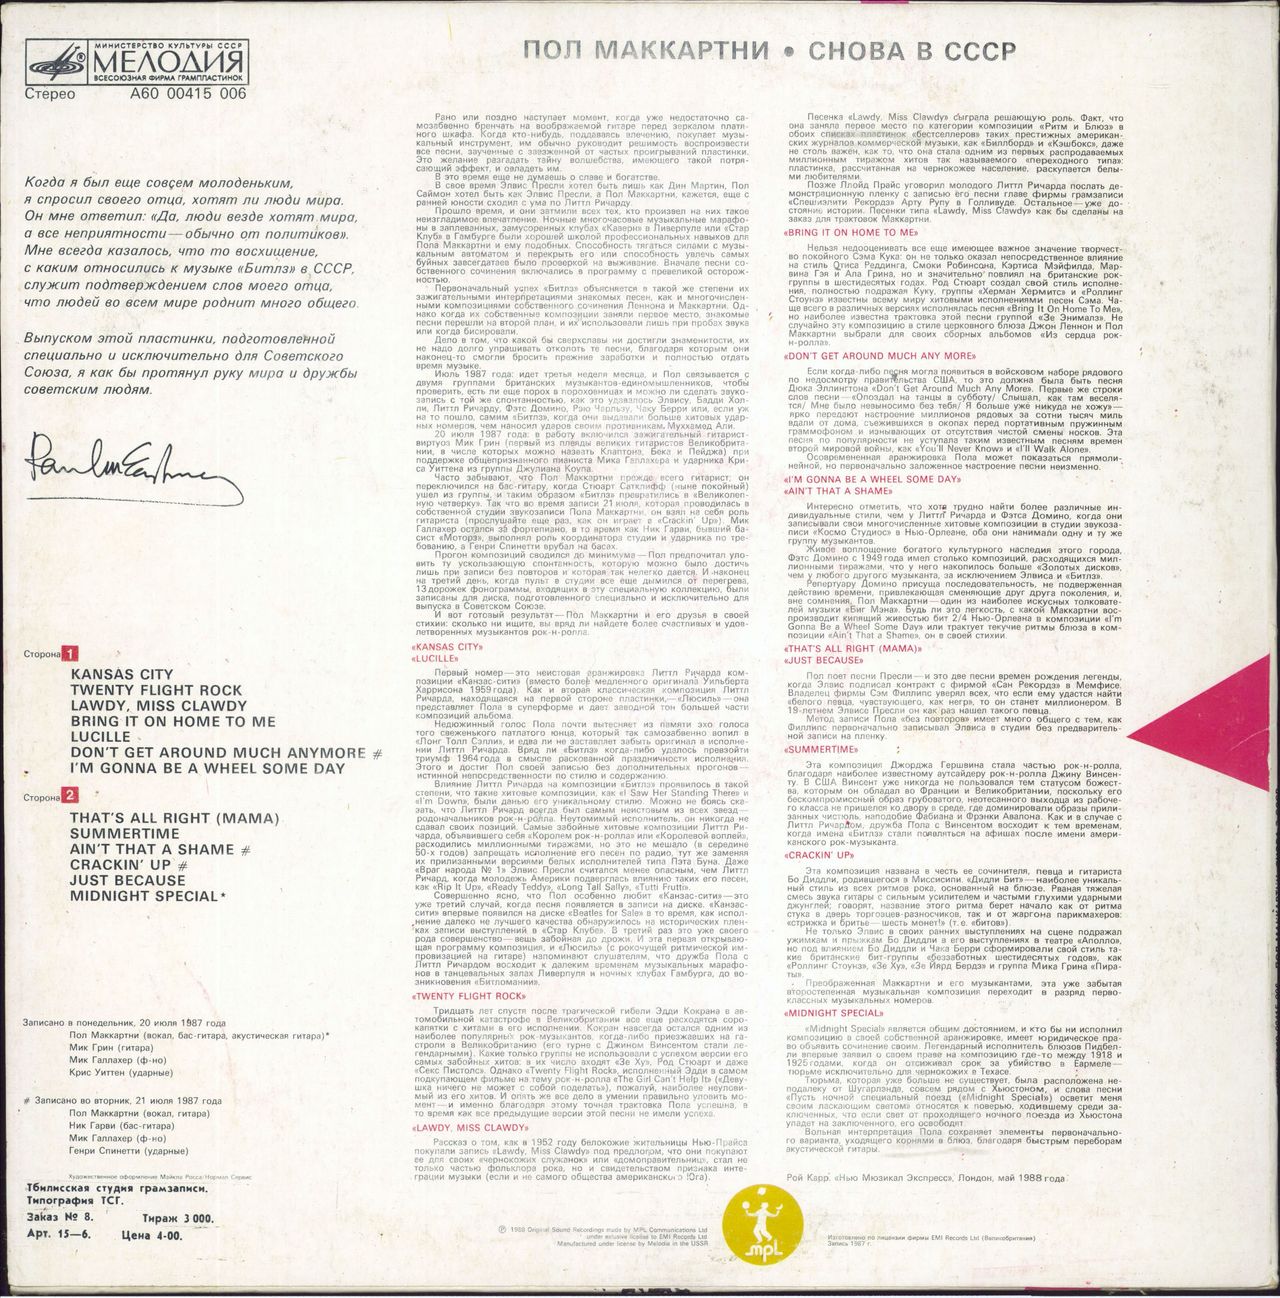 Paul Mccartney and Wings Choba B CCCP - 2nd Russian Vinyl LP Album Record A6000415006 Melodiya 1988